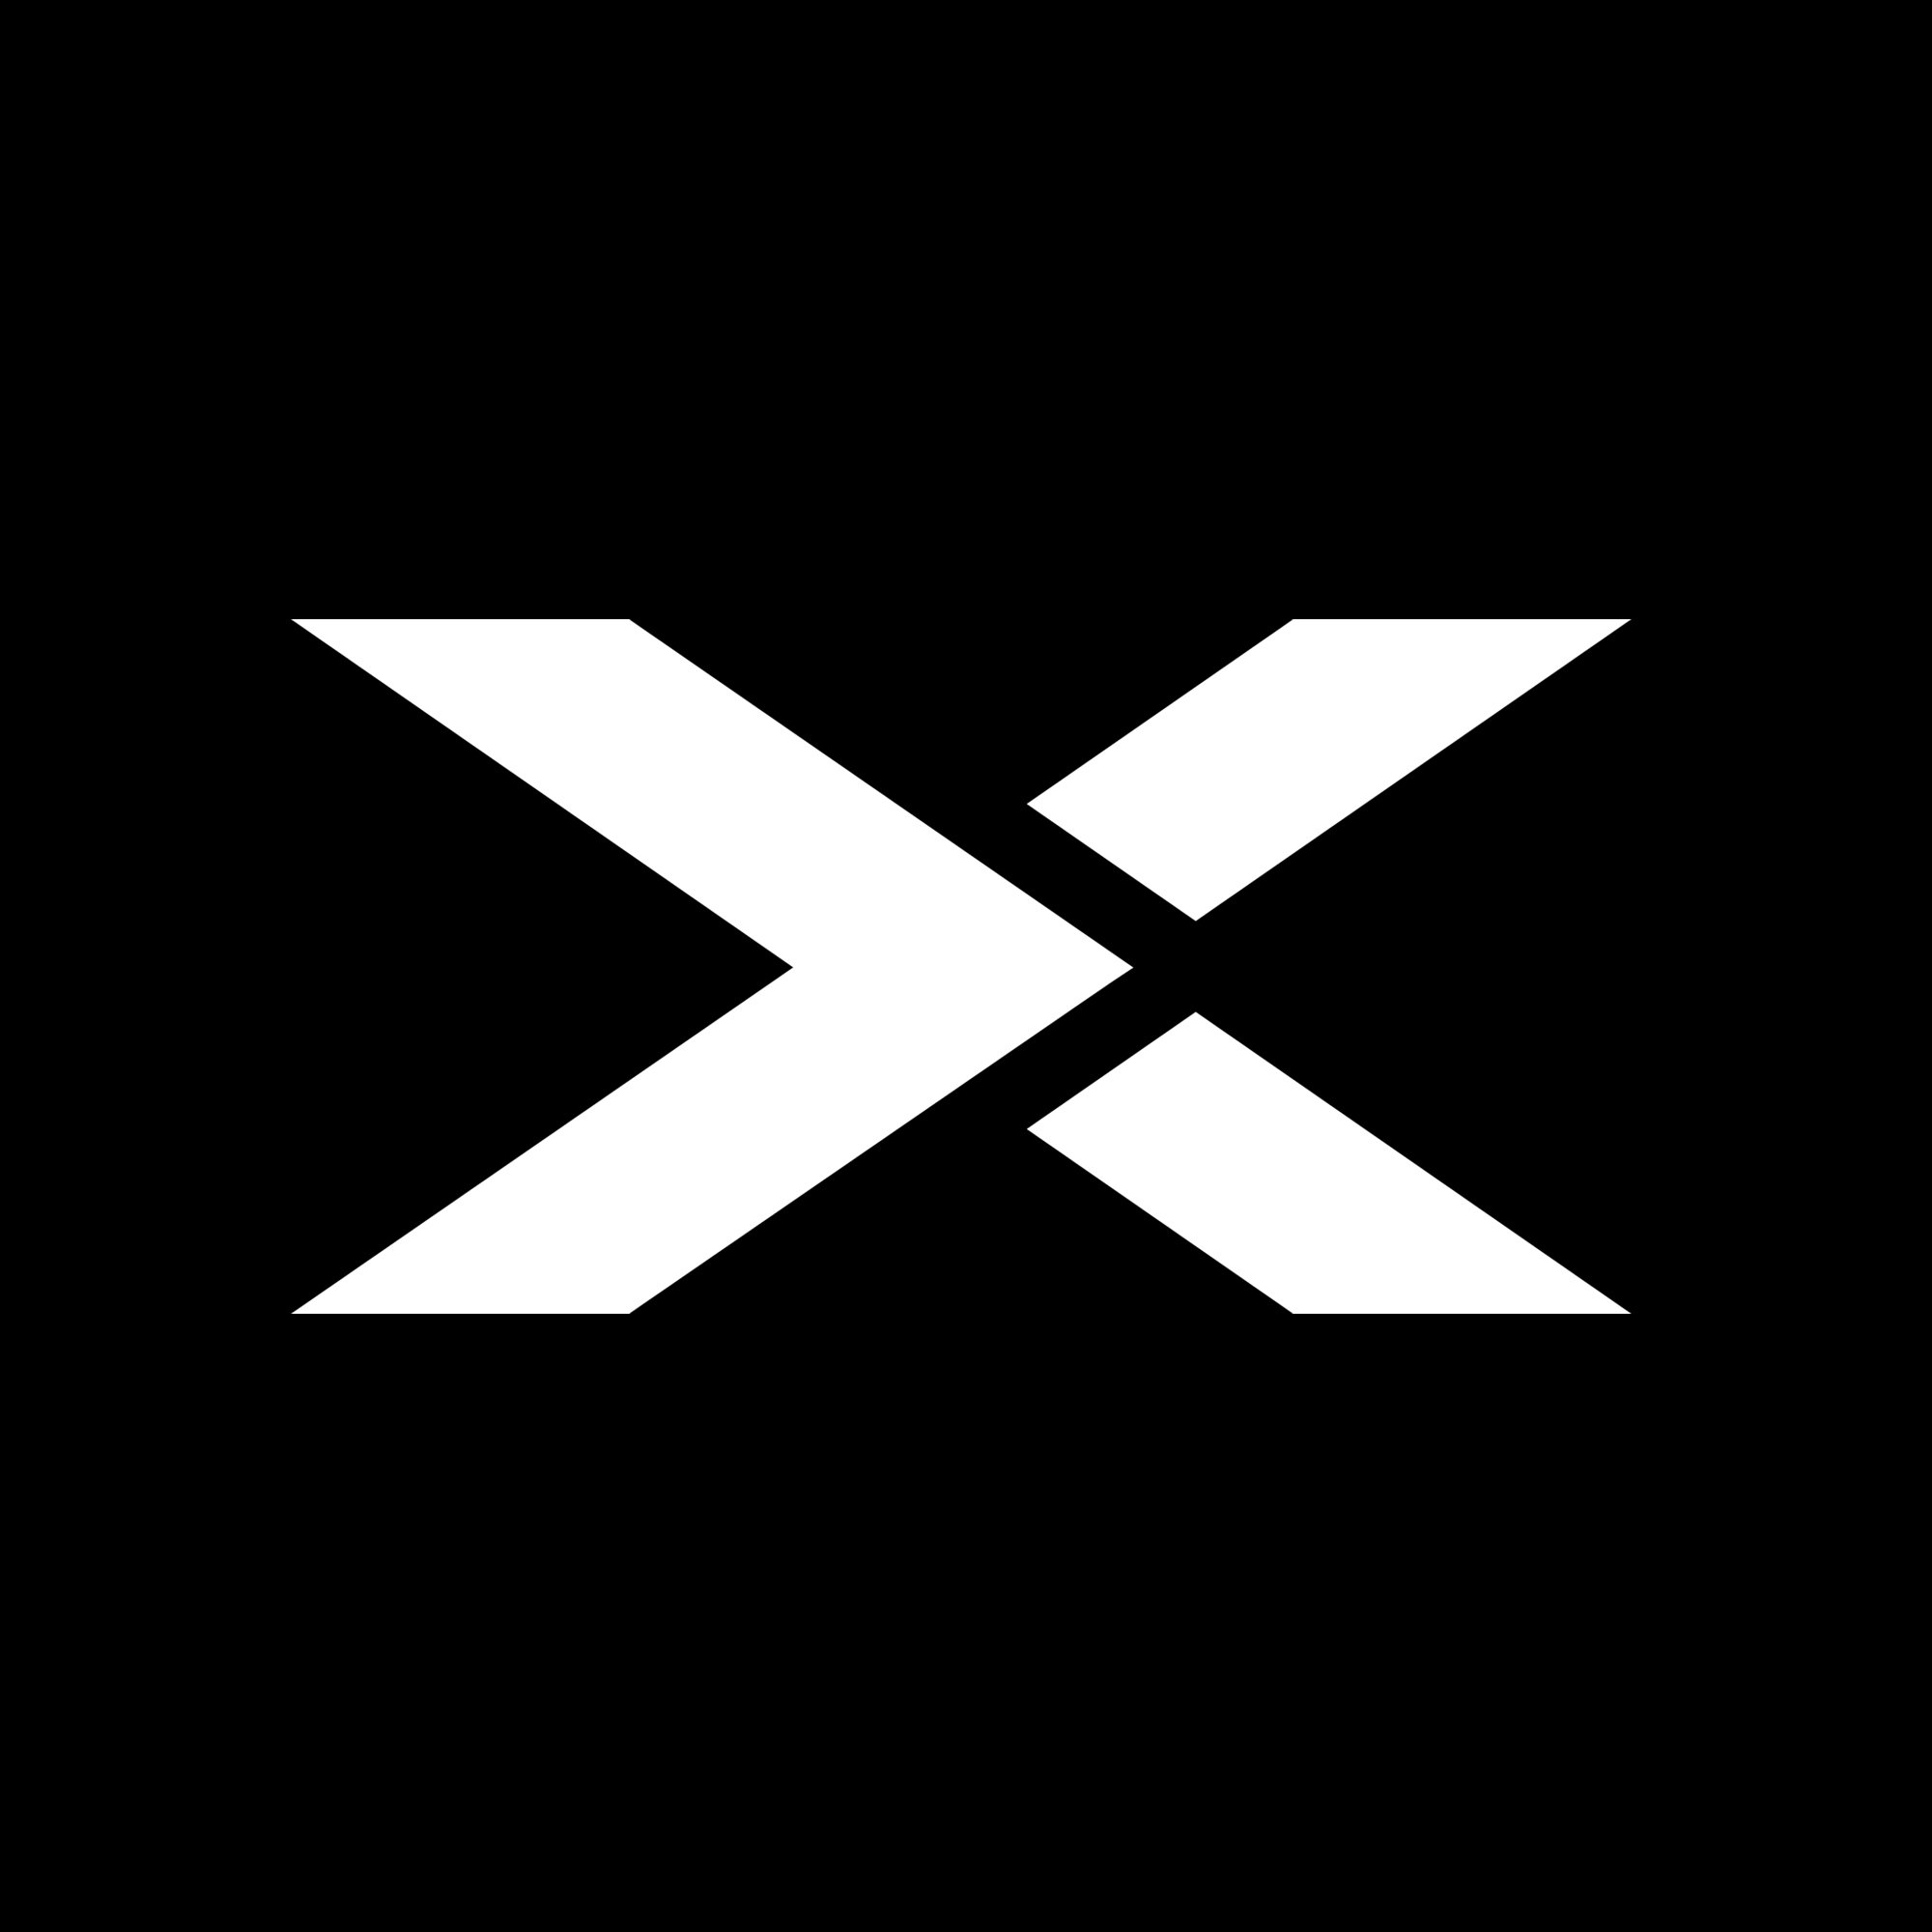 XFX Global Profile